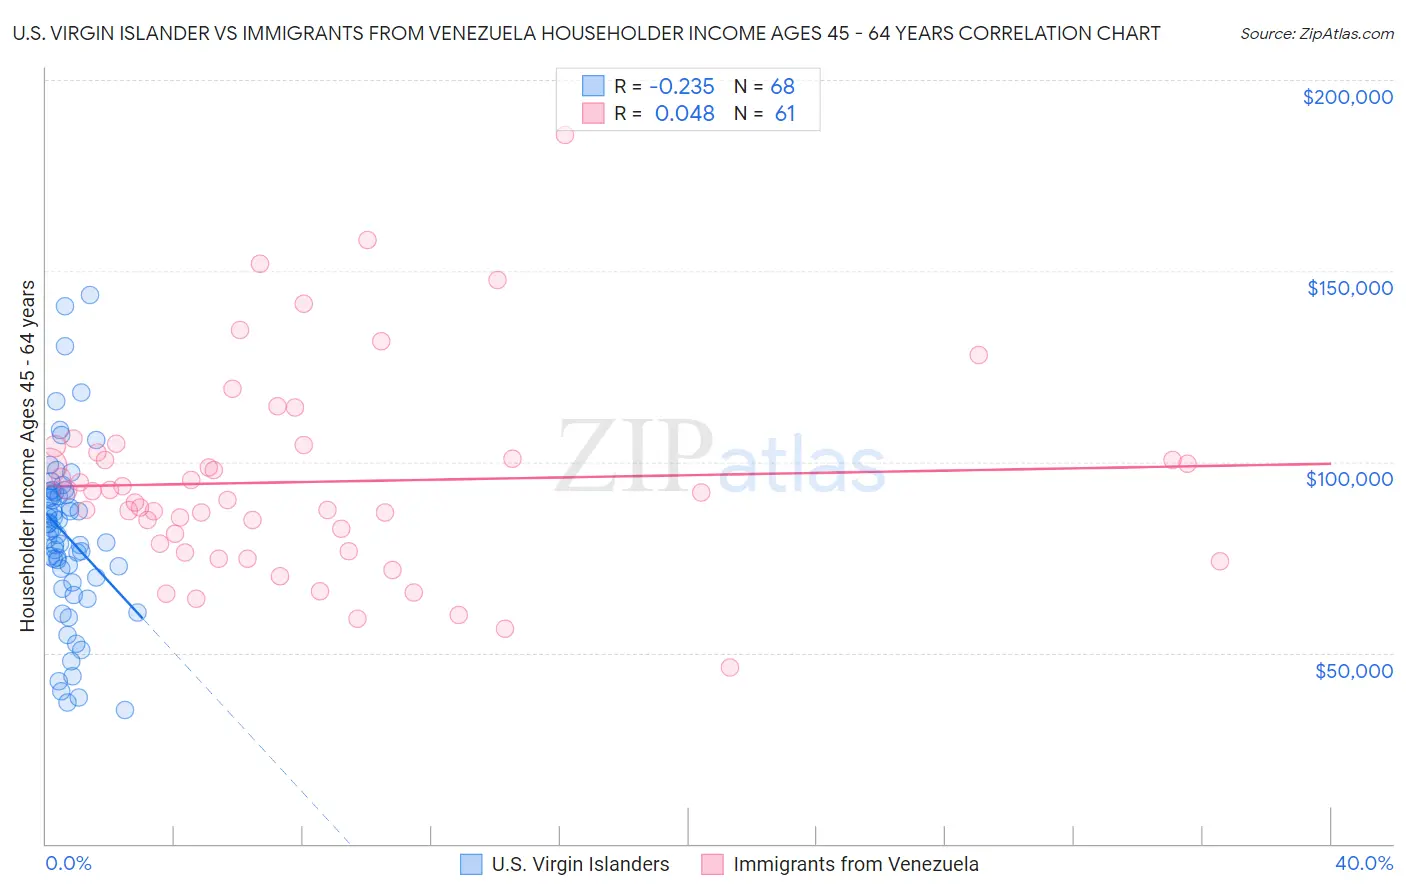 U.S. Virgin Islander vs Immigrants from Venezuela Householder Income Ages 45 - 64 years